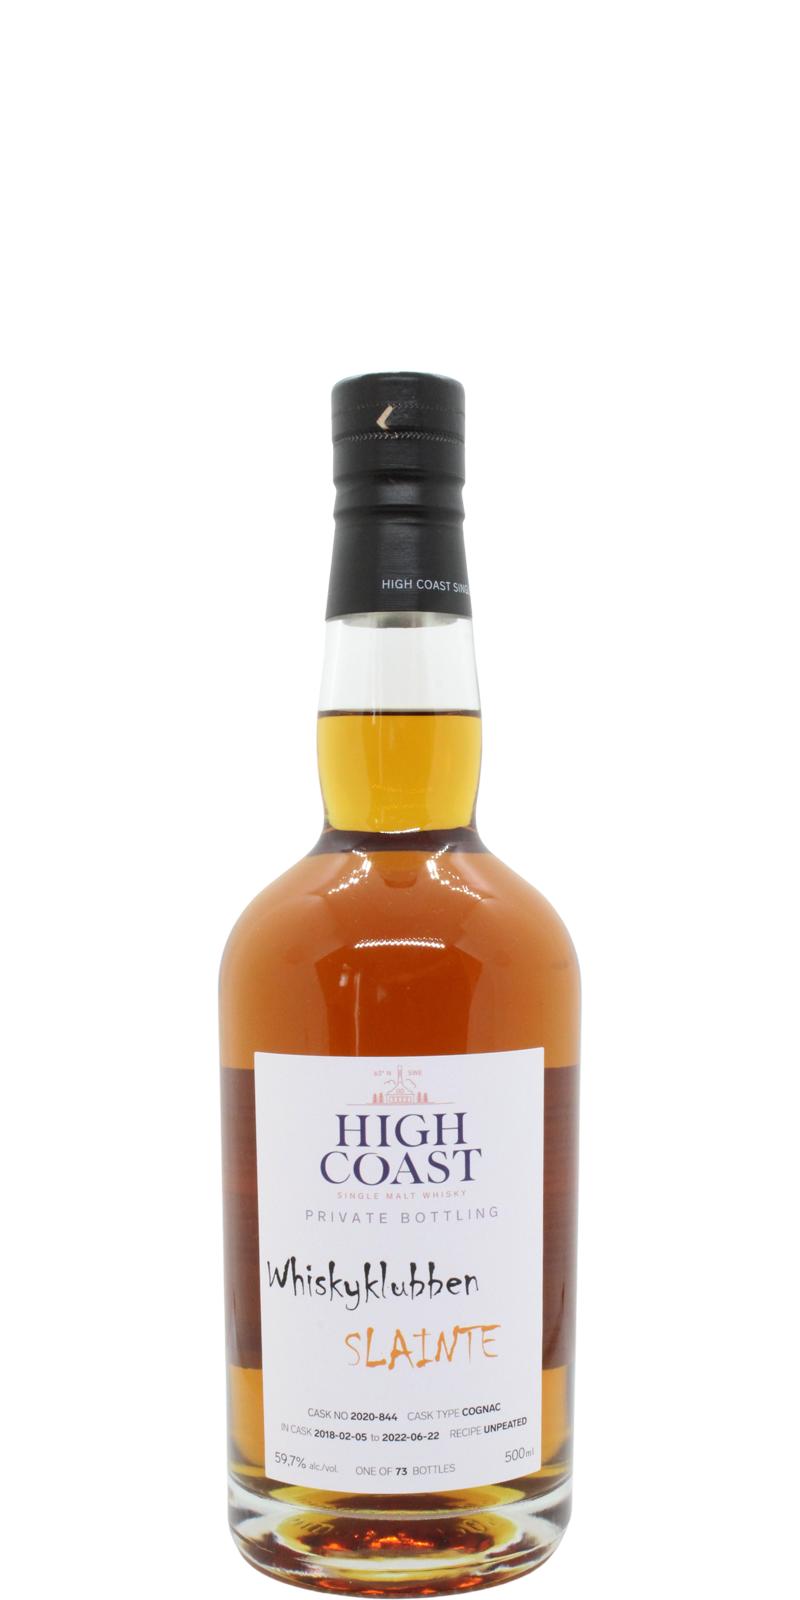 High Coast 2018 WSla Cognac Whiskyklubben Slainte 59.7% 500ml